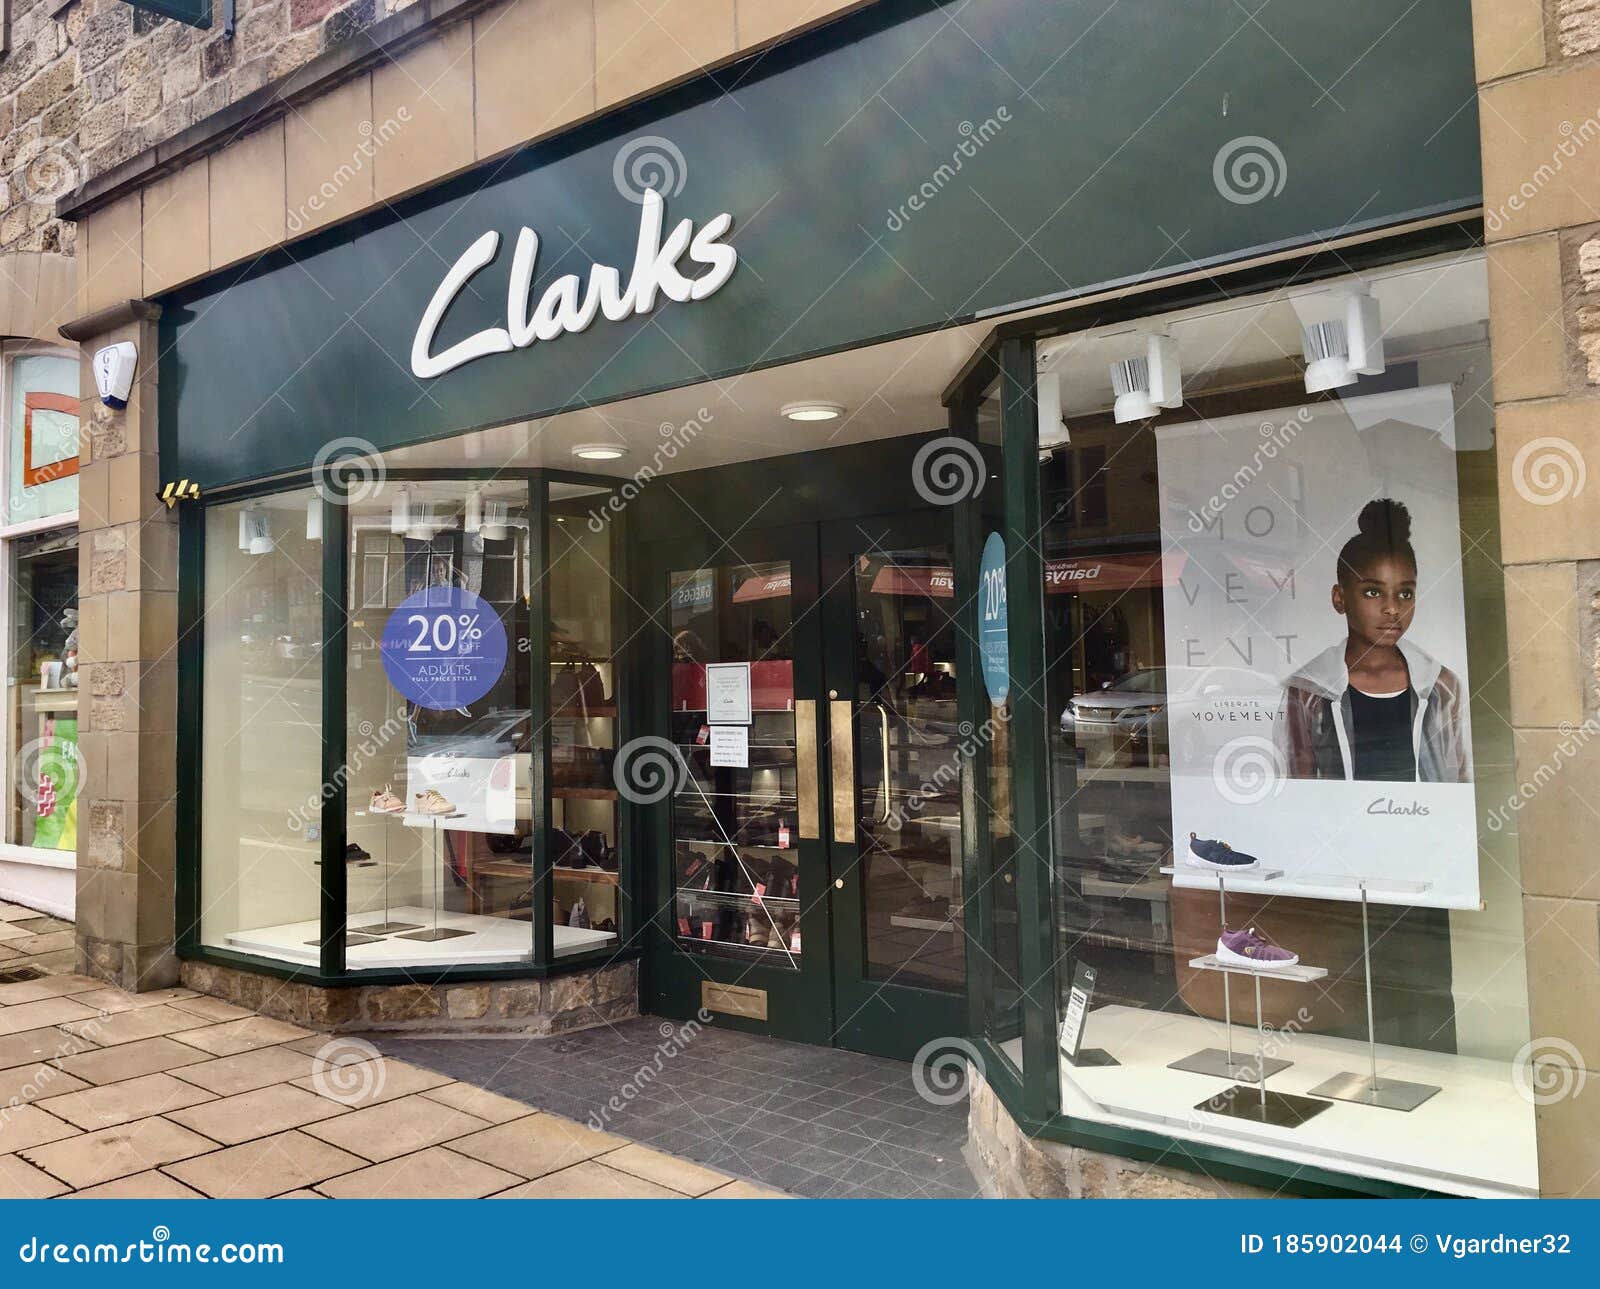 Clarks Shoe Shop in Yorkshire, United Kingdom Editorial Stock Image - Image shop, business: 185902044